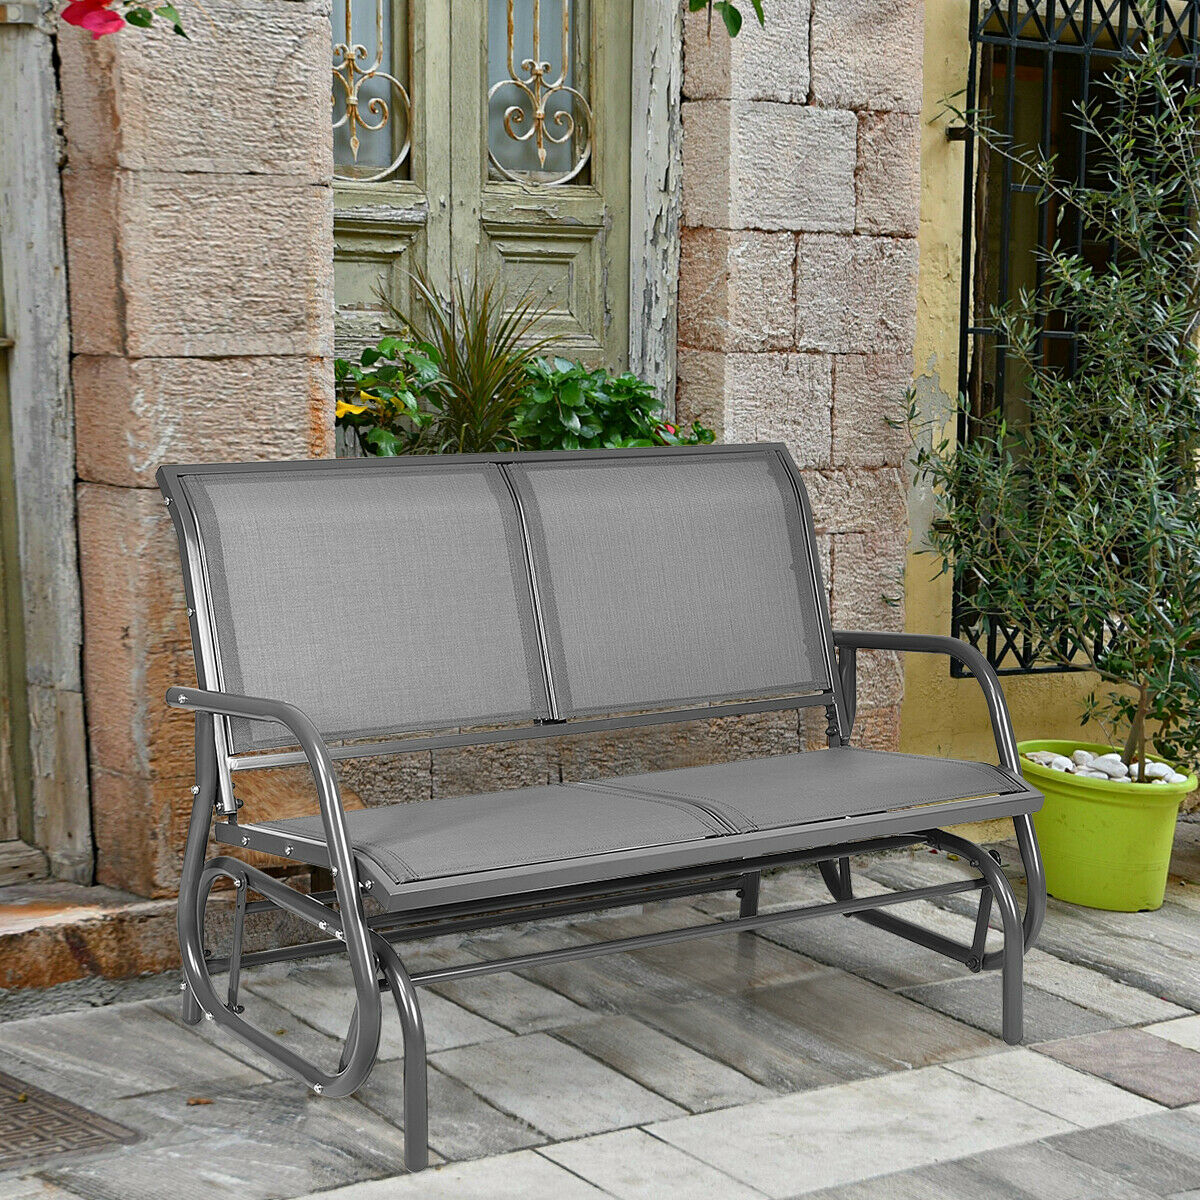 Gymax 48'' Outdoor Patio Swing Glider Bench Chair Loveseat Rocker Lounge Backyard Grey - image 1 of 10